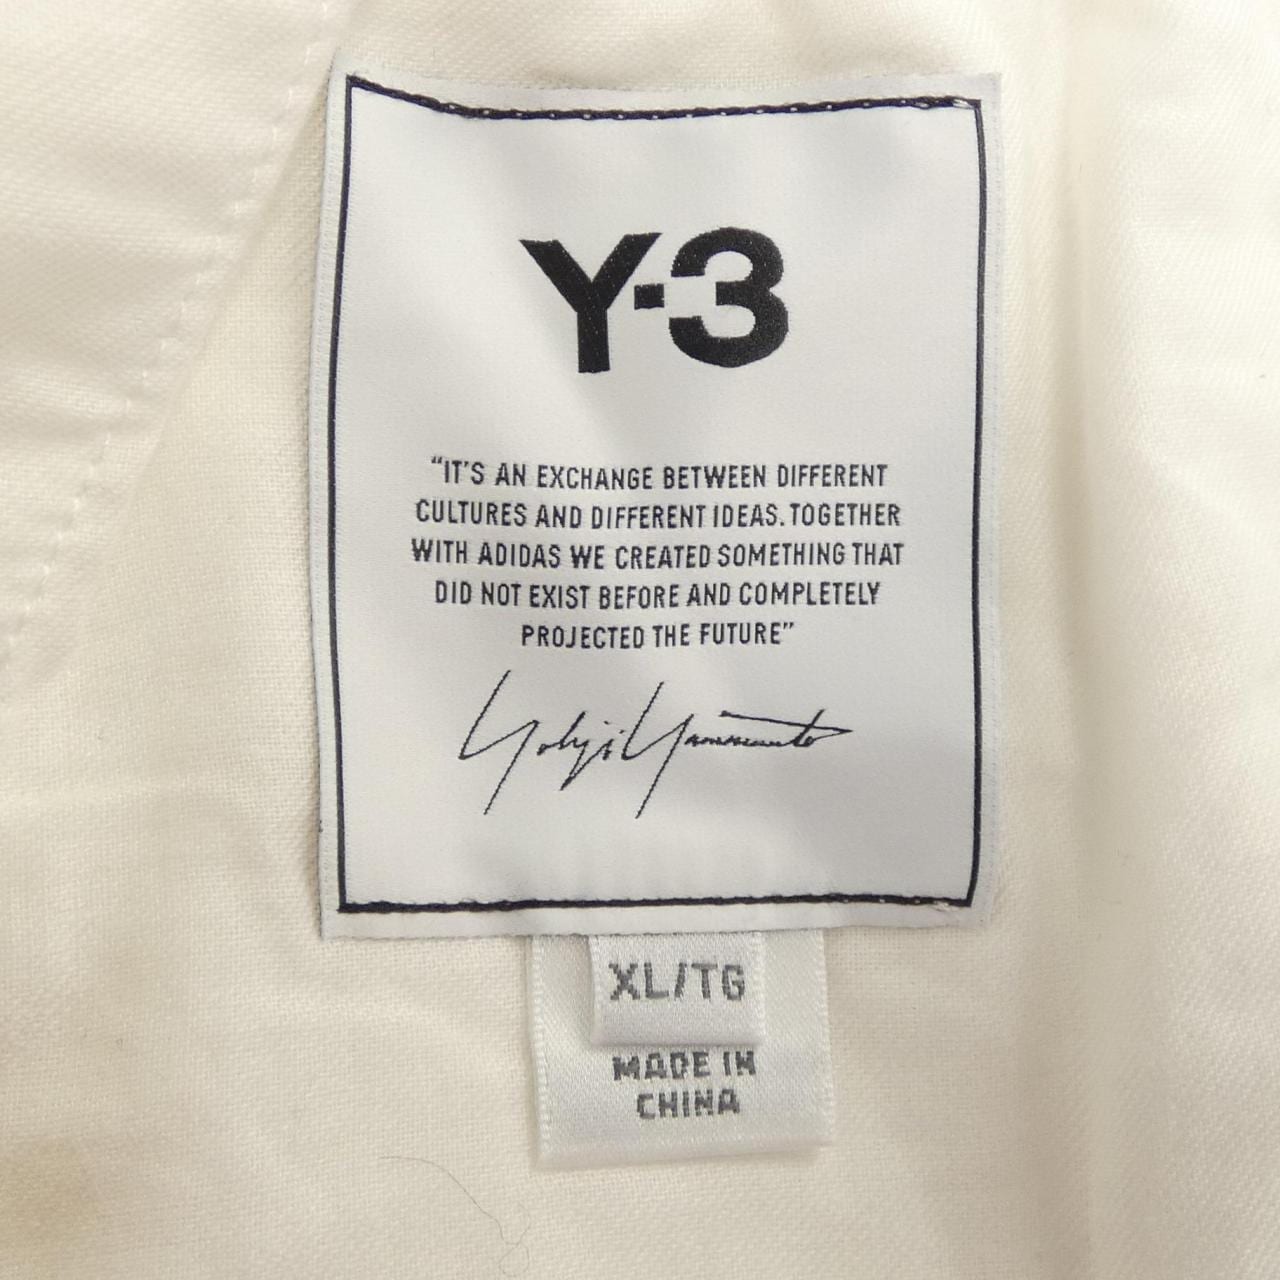 Y-3 Shorts